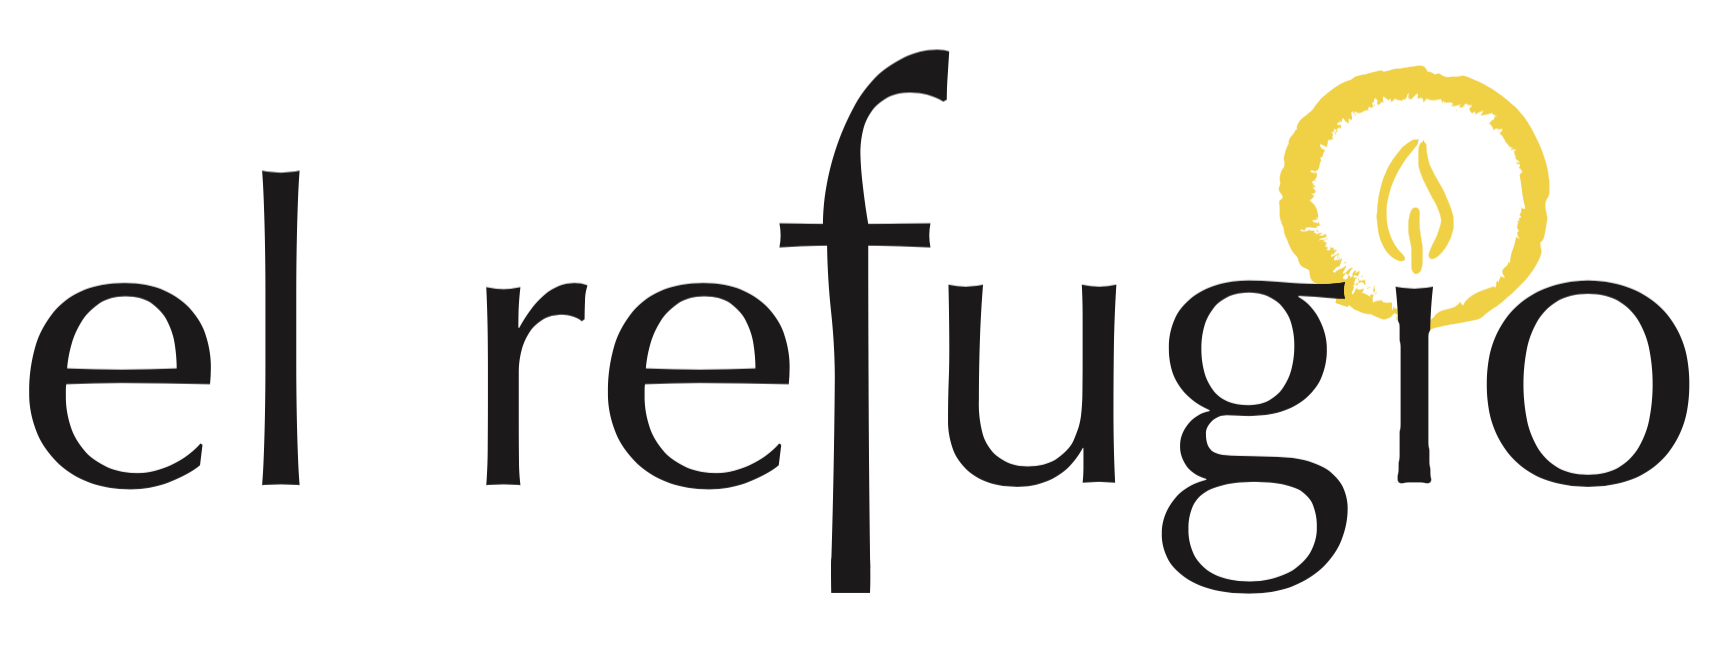 Details 48 el refugio logo